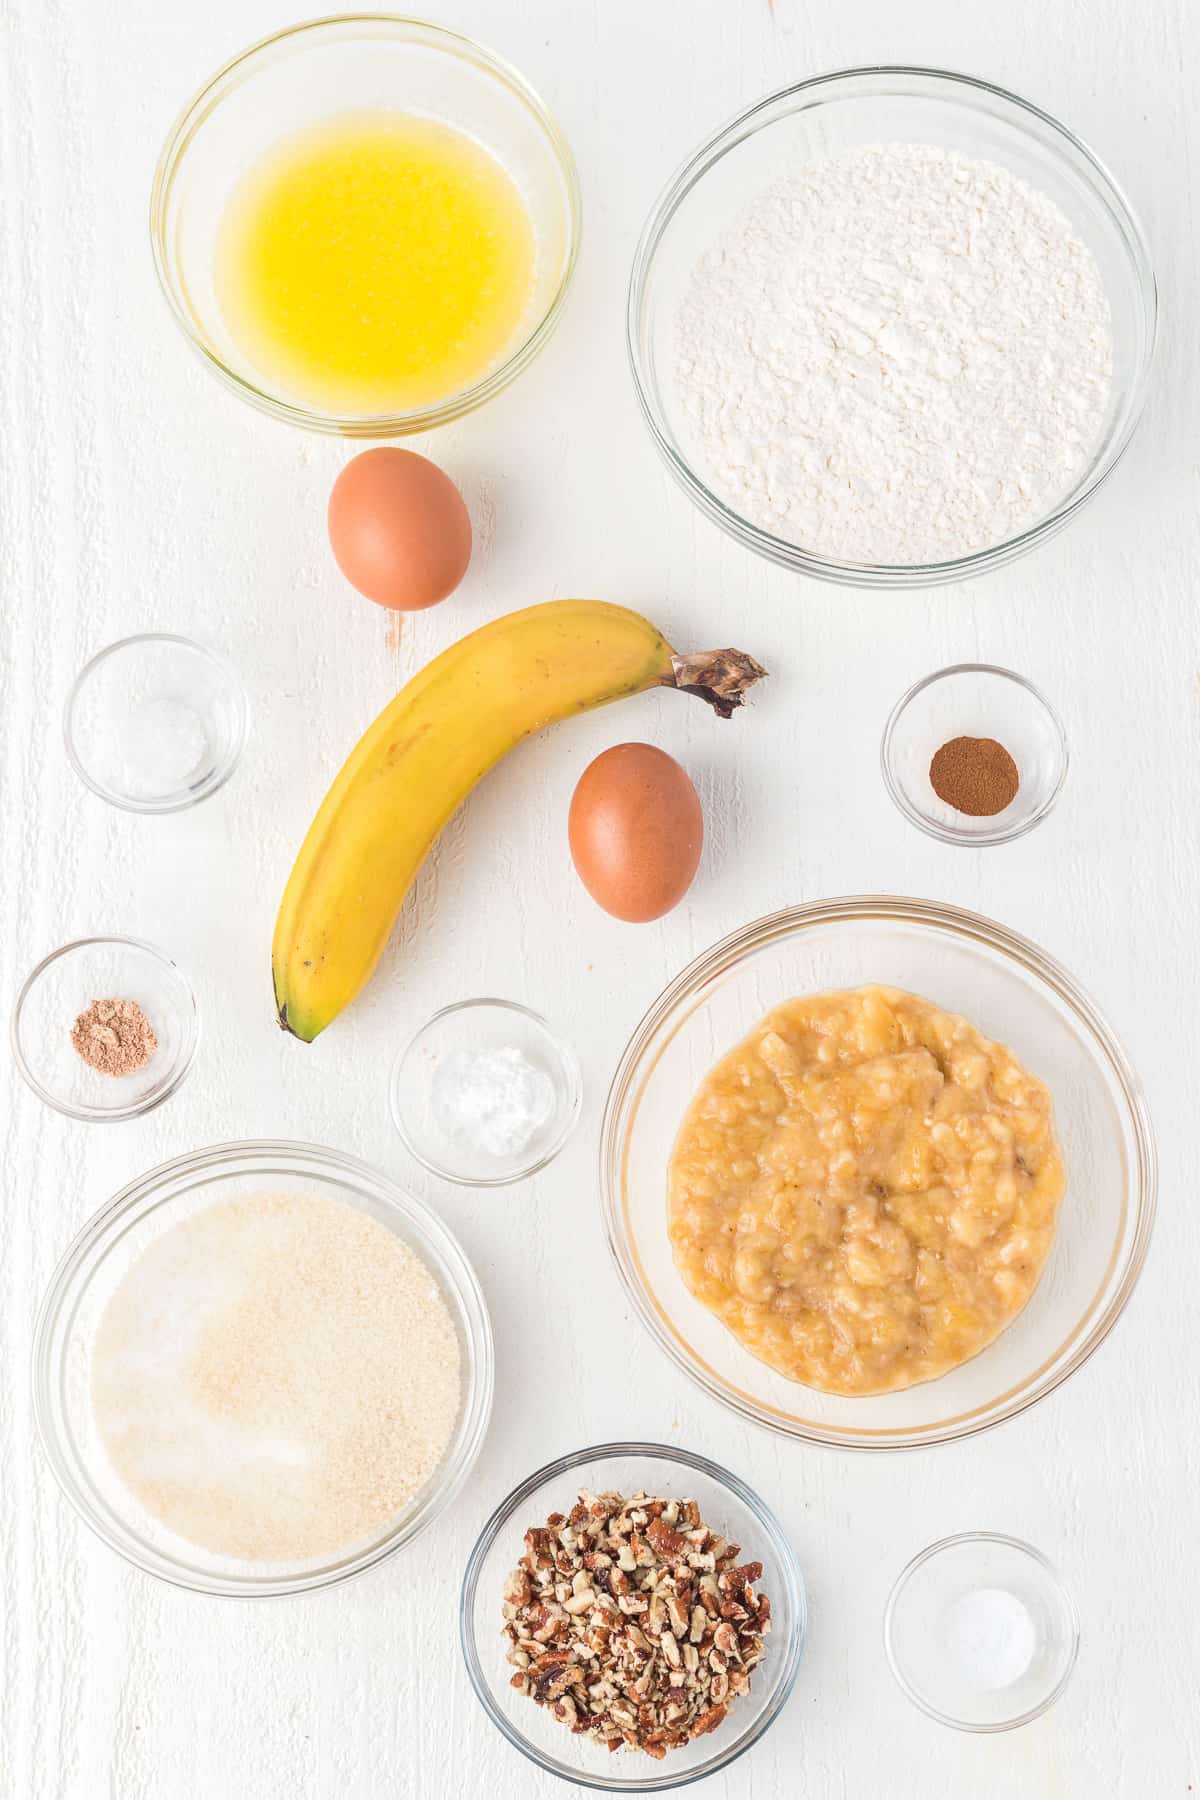 Ingredients for Best Banana Bread